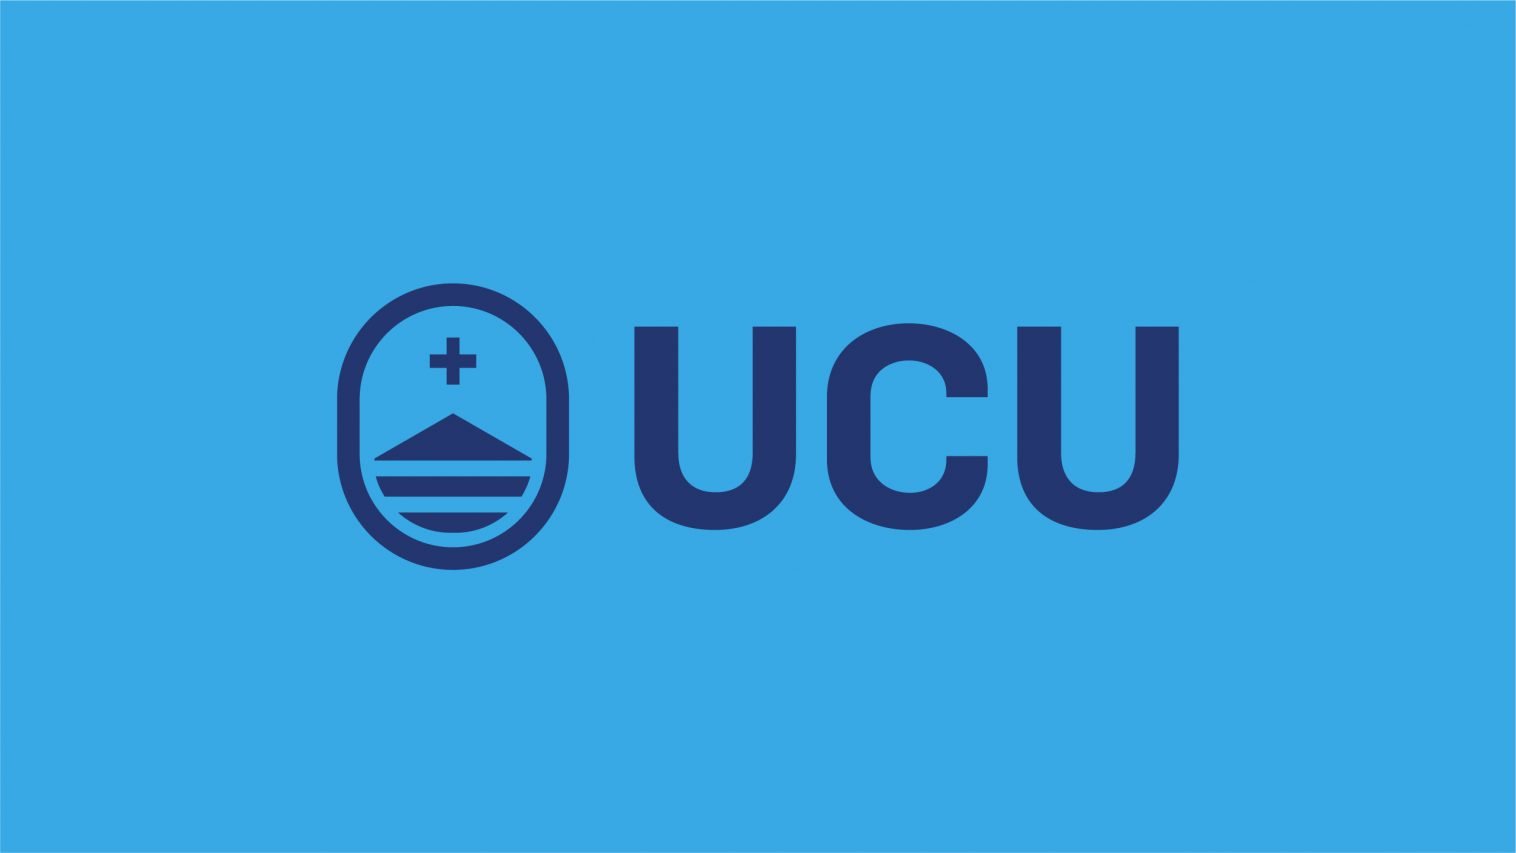 Logo Ucu 001 Final 02